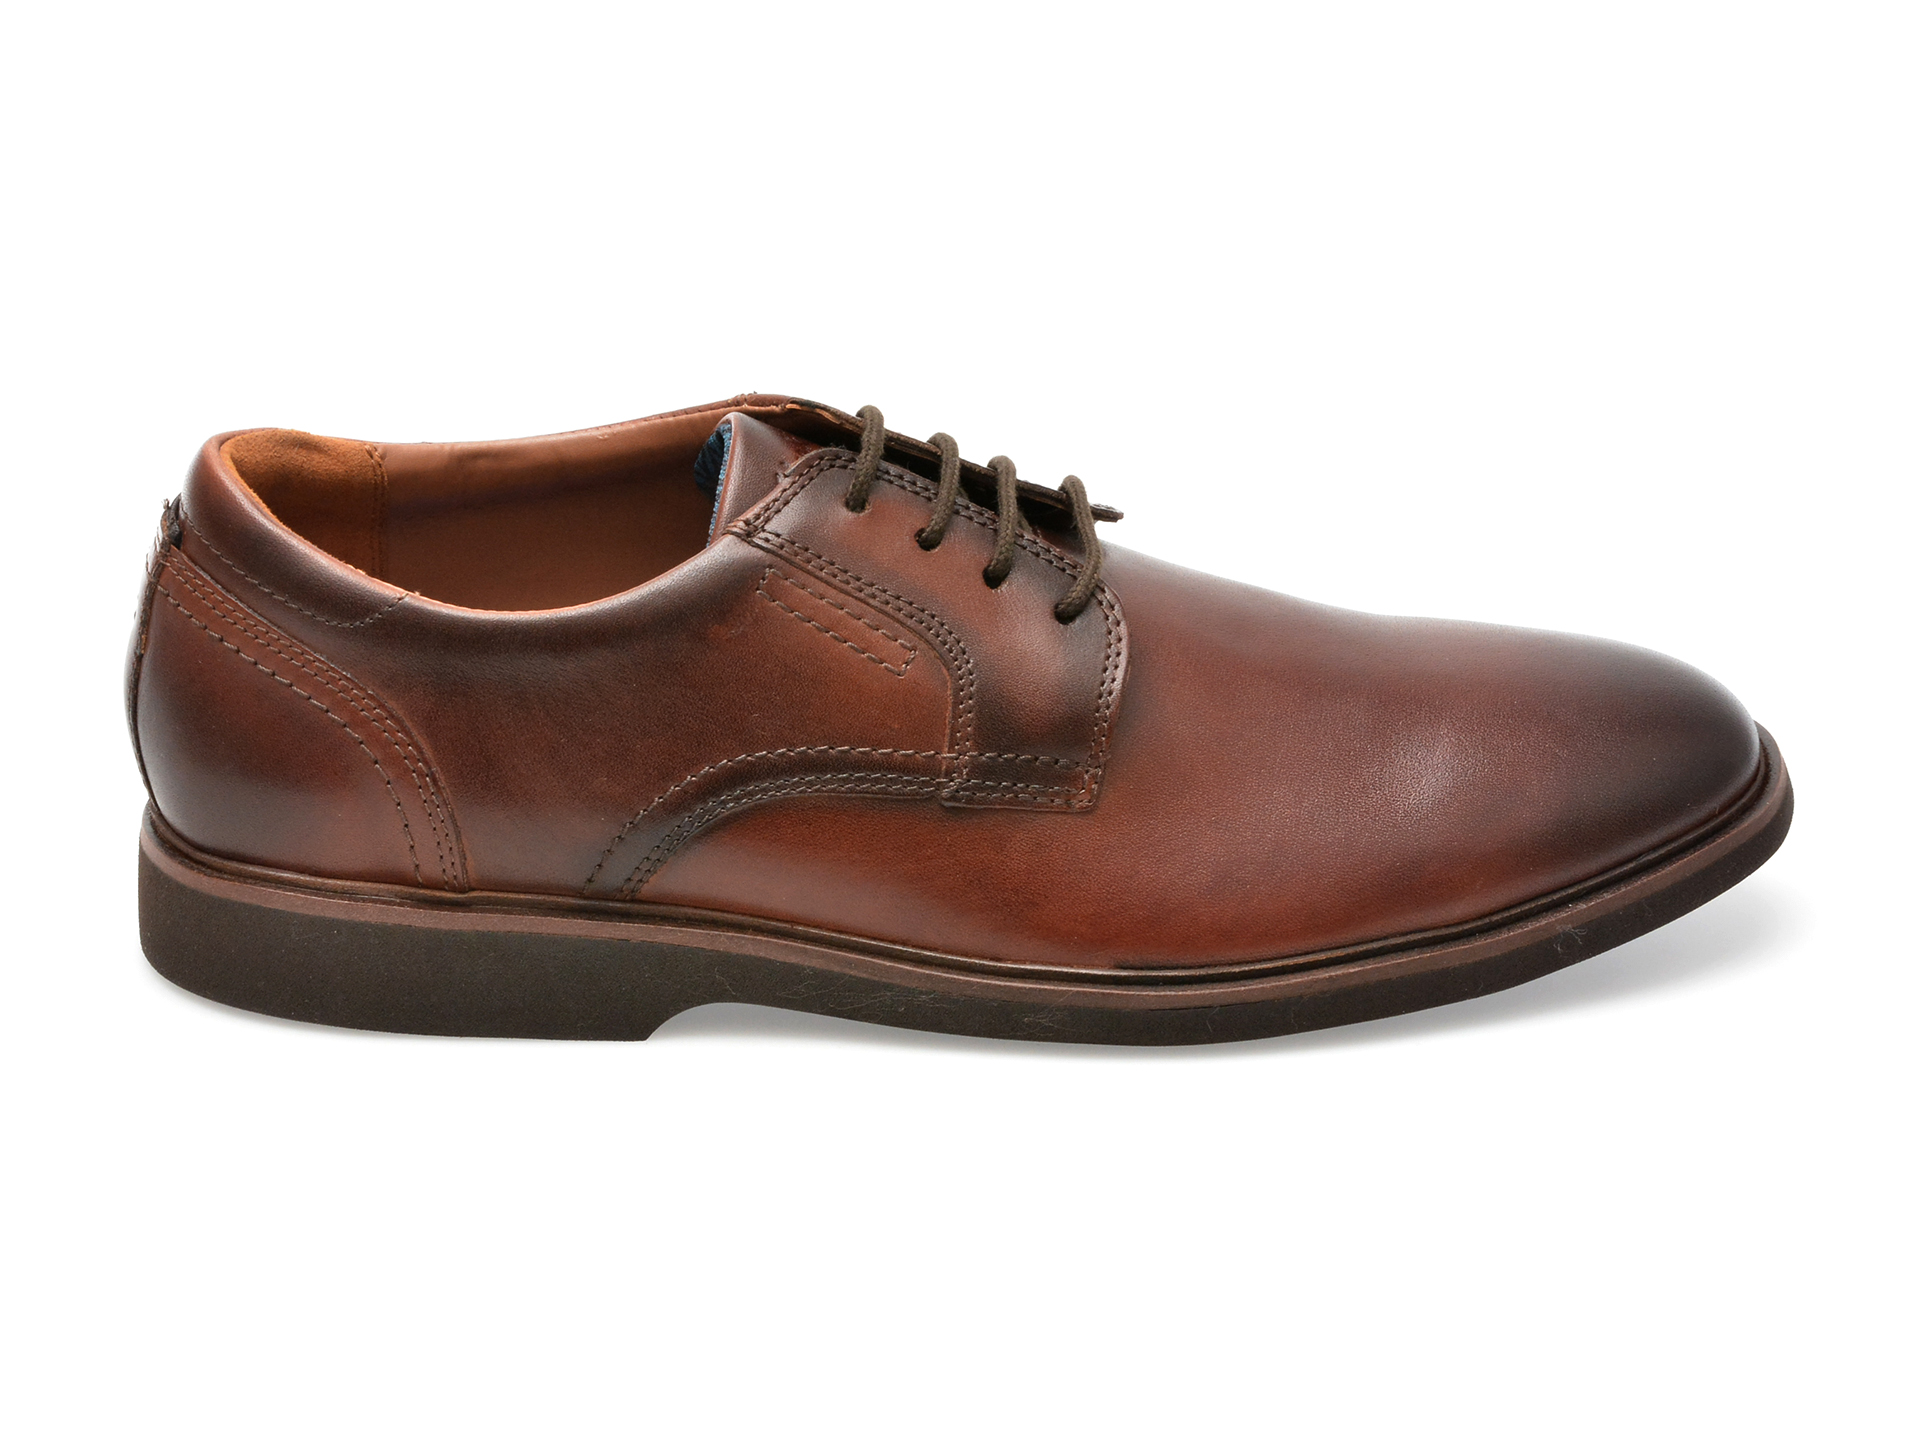 Pantofi CLARKS maro, MALWOOD LACE, din piele naturala